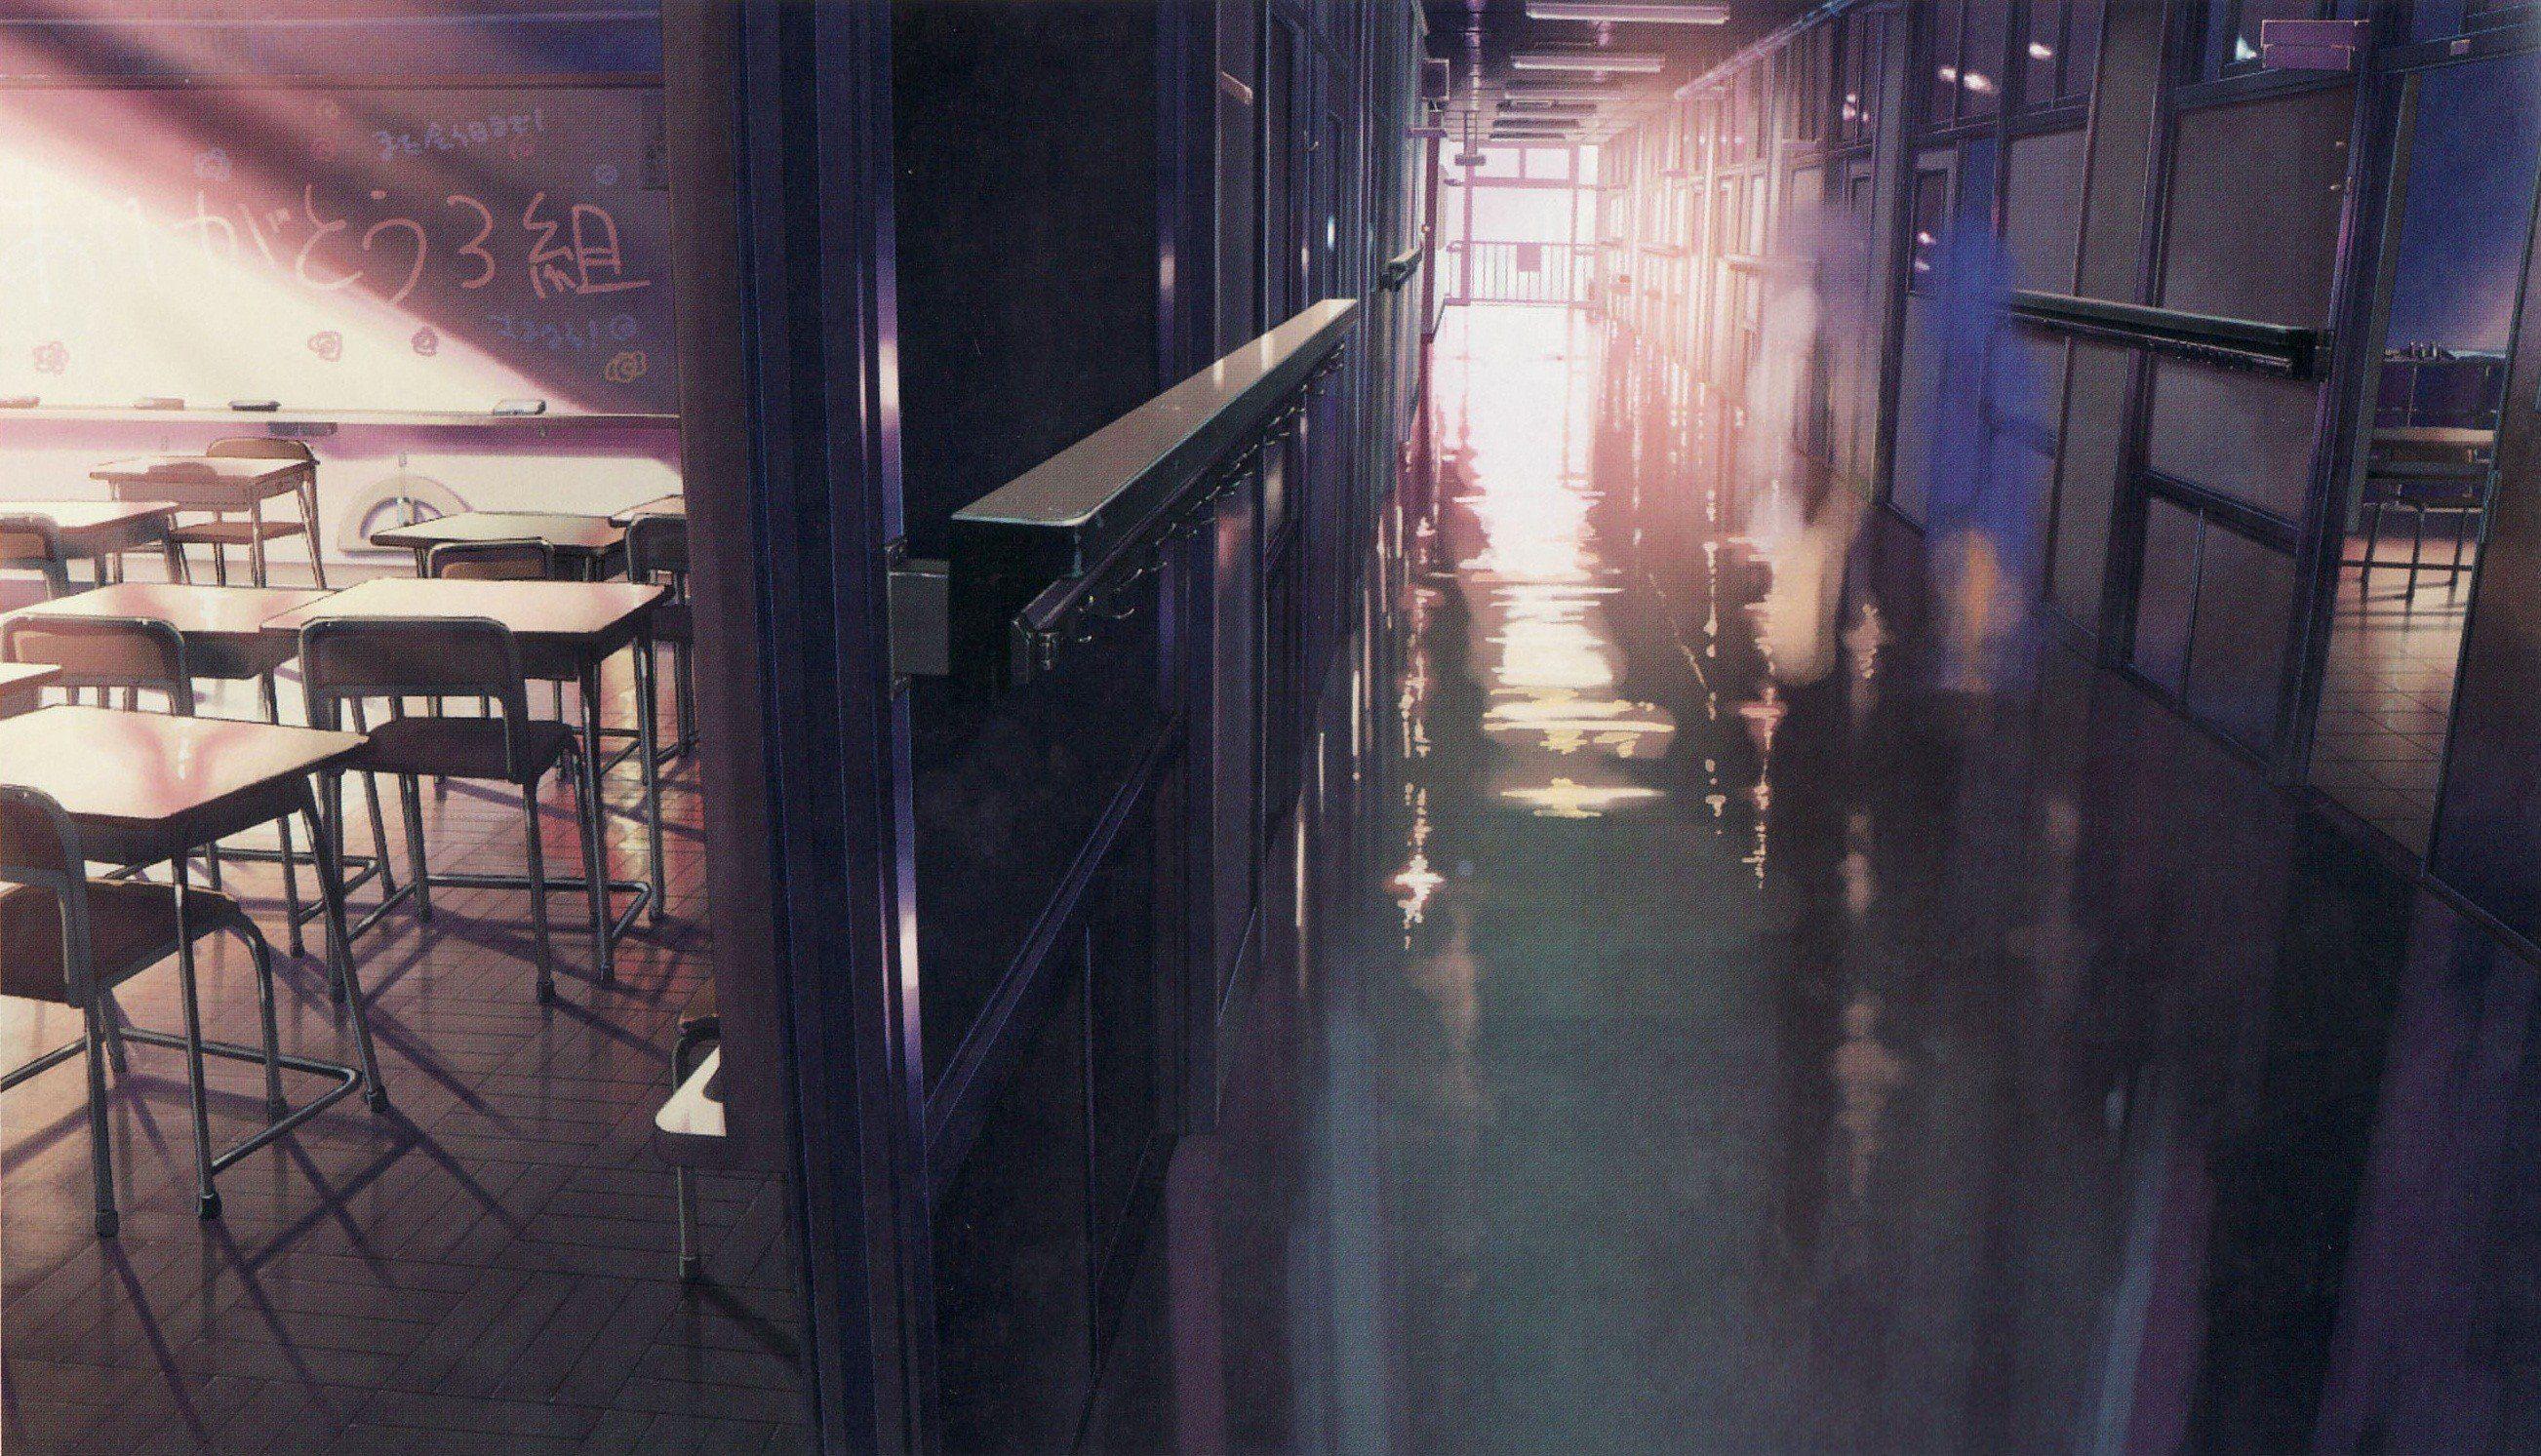 School memories Makoto Shinkai 5 Centimeters Per Second